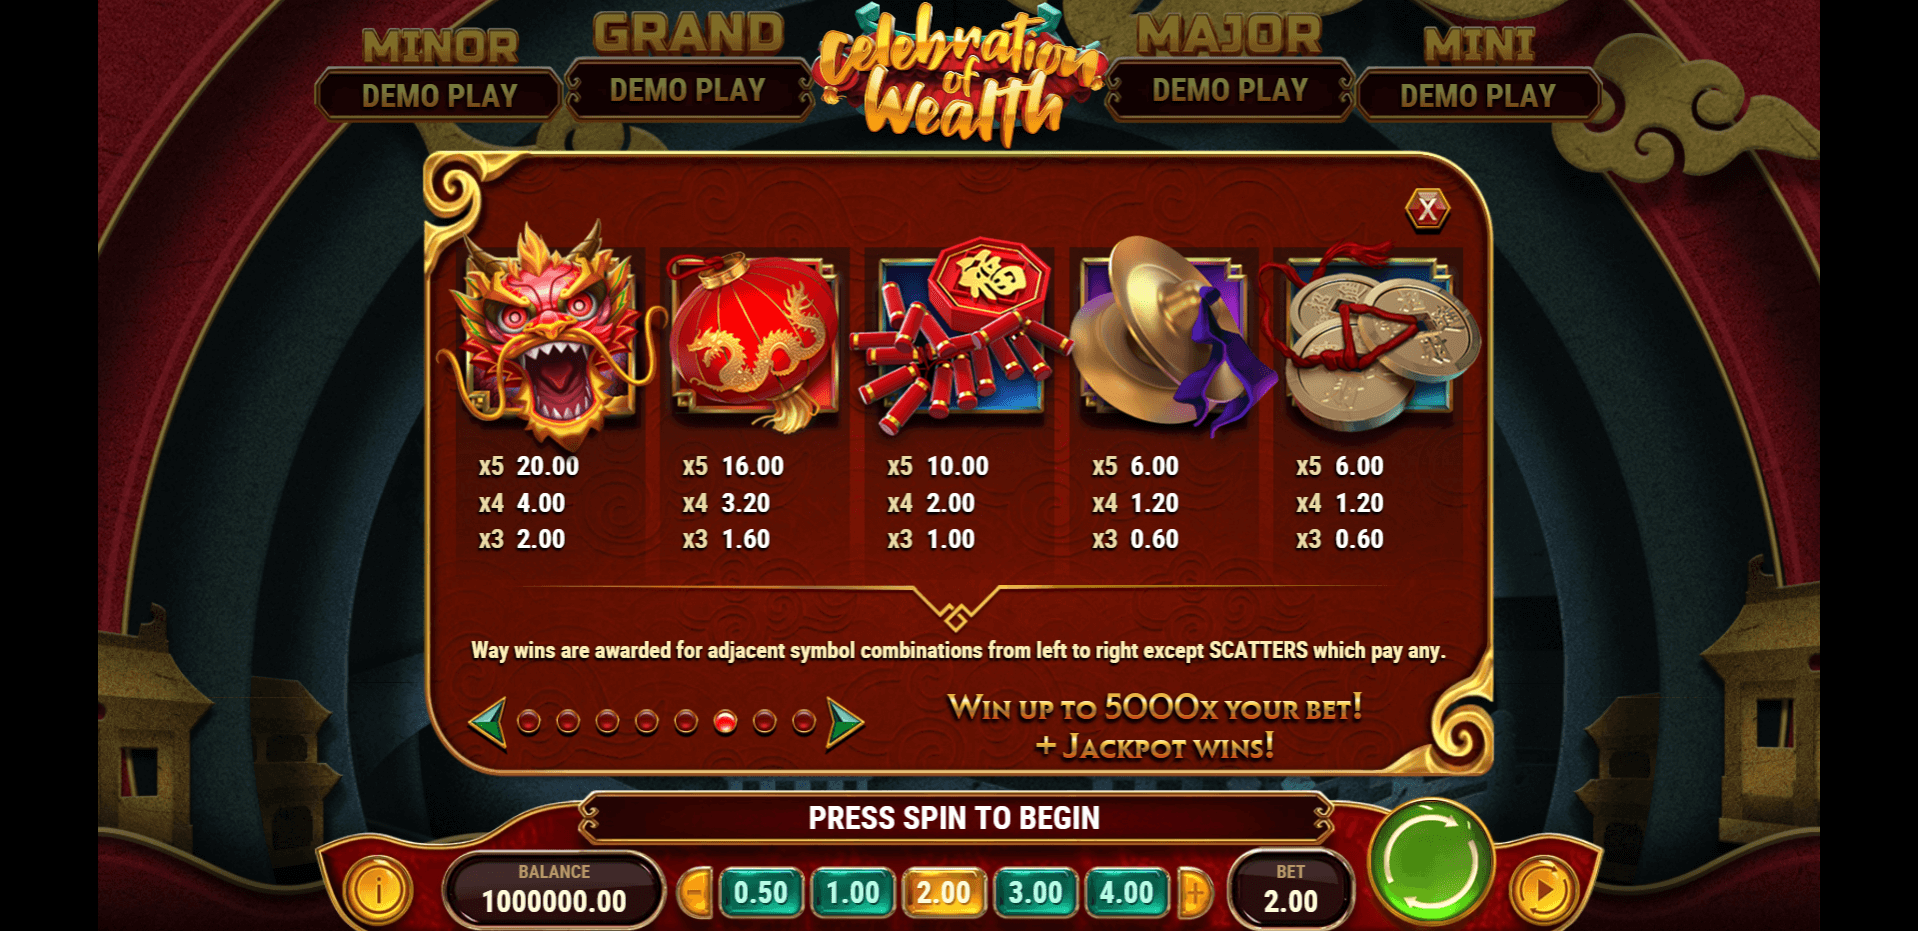 celebration of wealth slot machine detail image 5